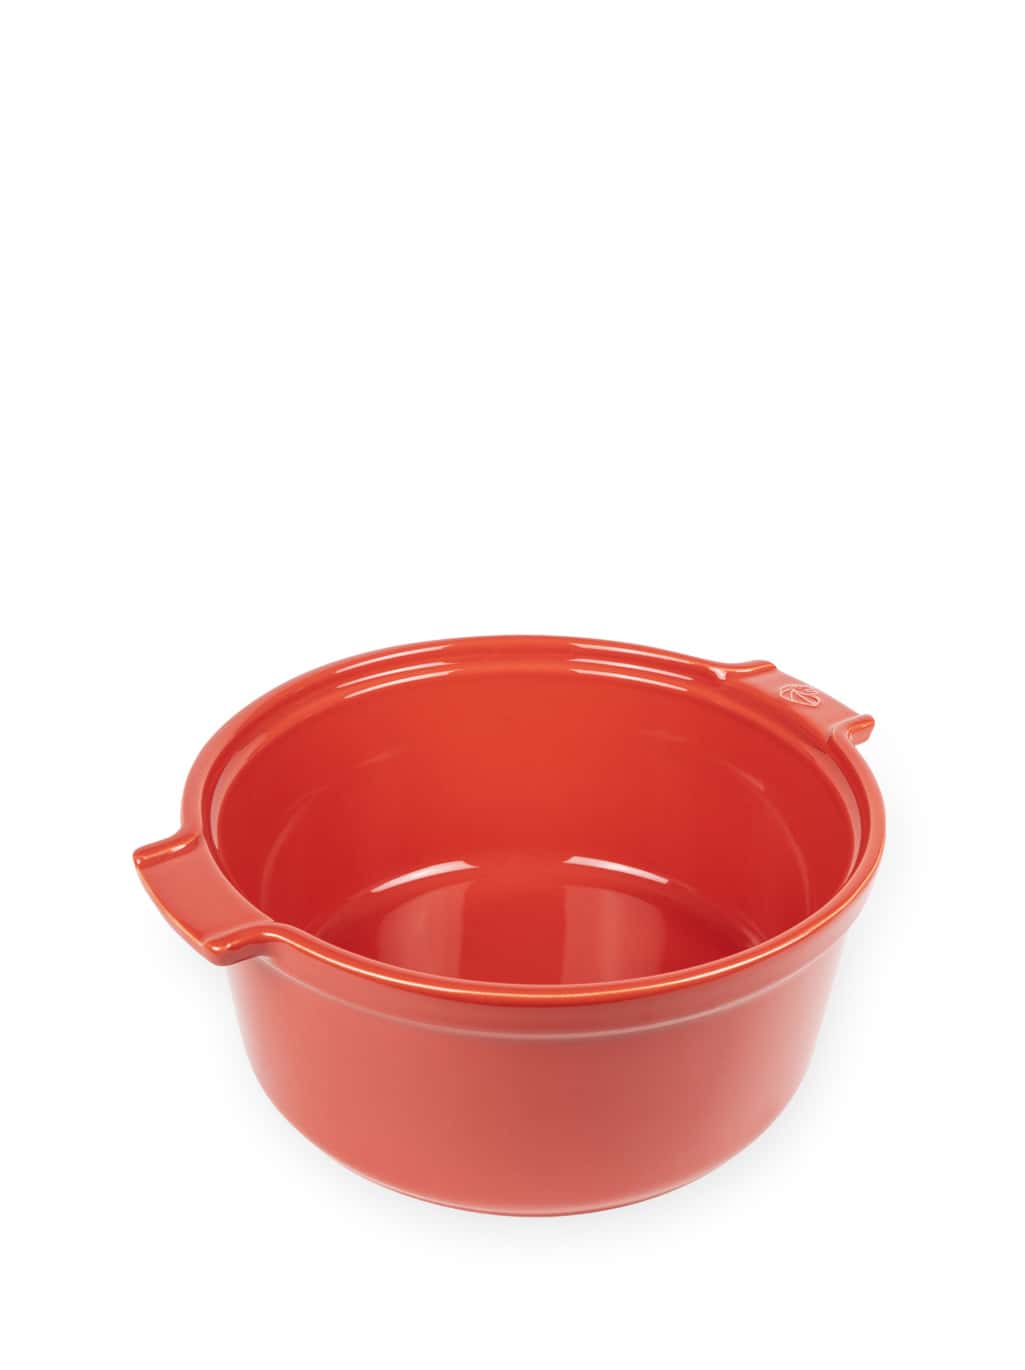 Image of Appolia Red Ceramic Soufflé Dish Appolia